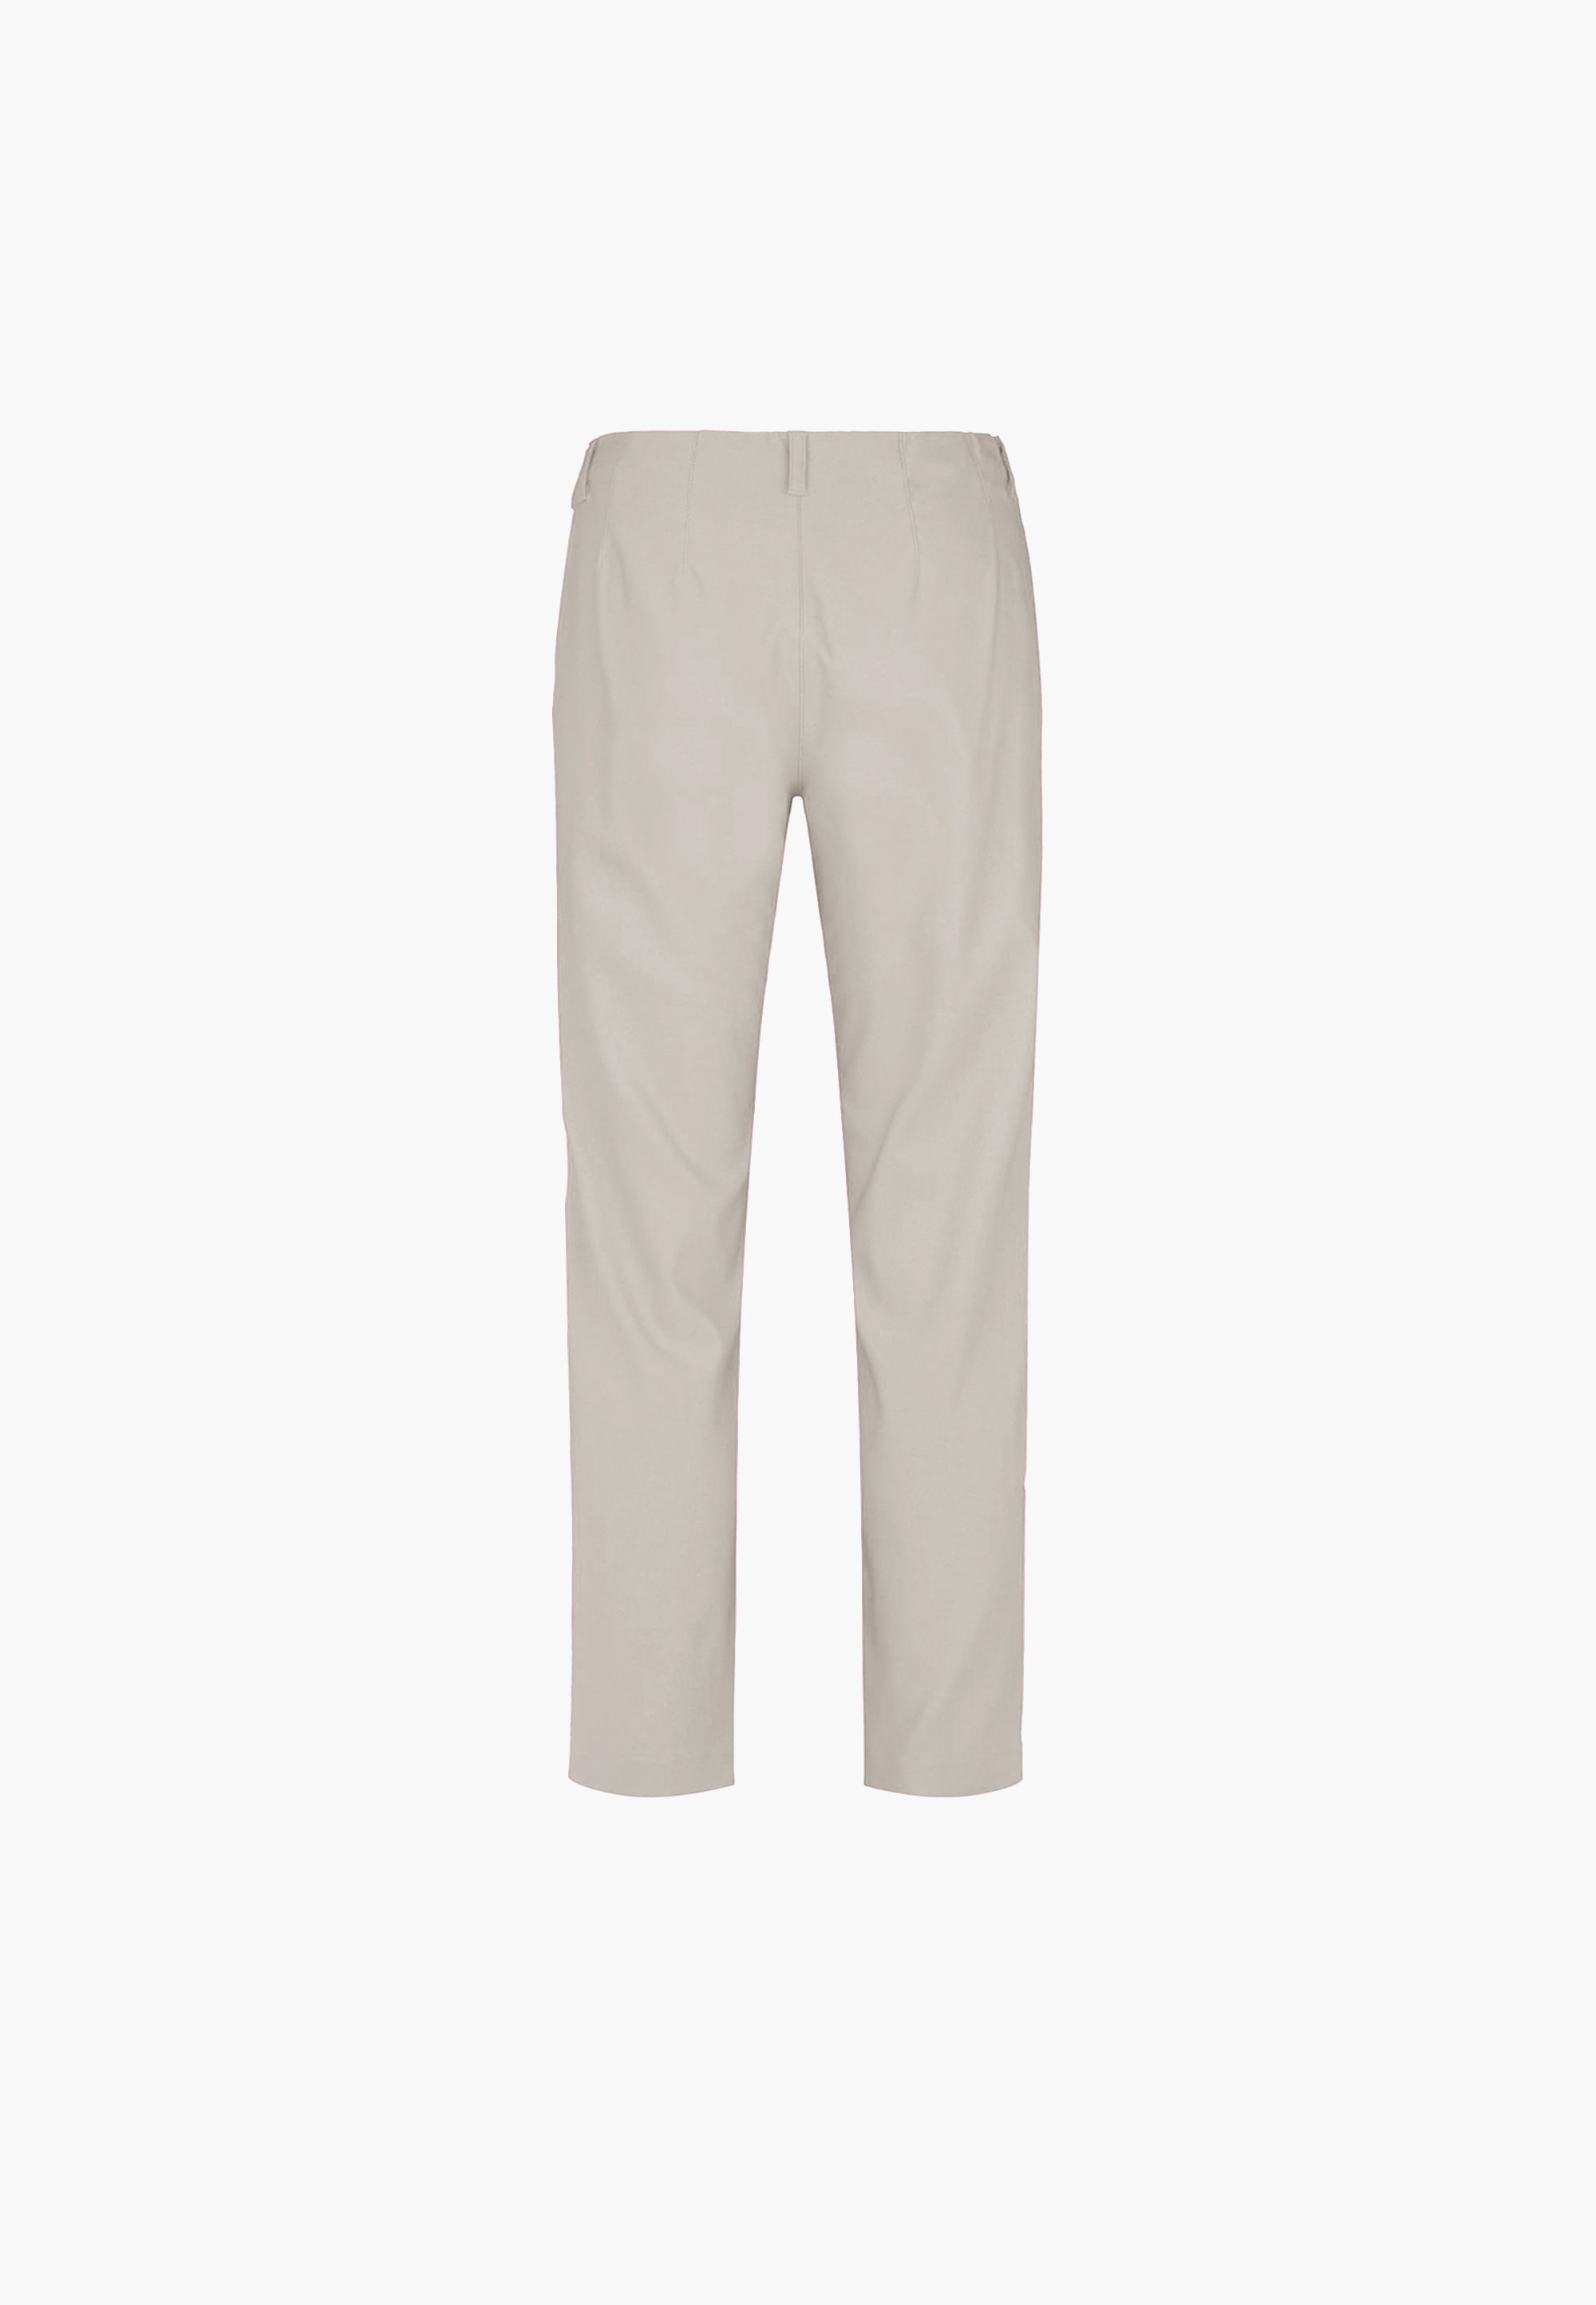 LAURIE  Taylor Regular - Short Length Trousers REGULAR 25000 Grey Sand